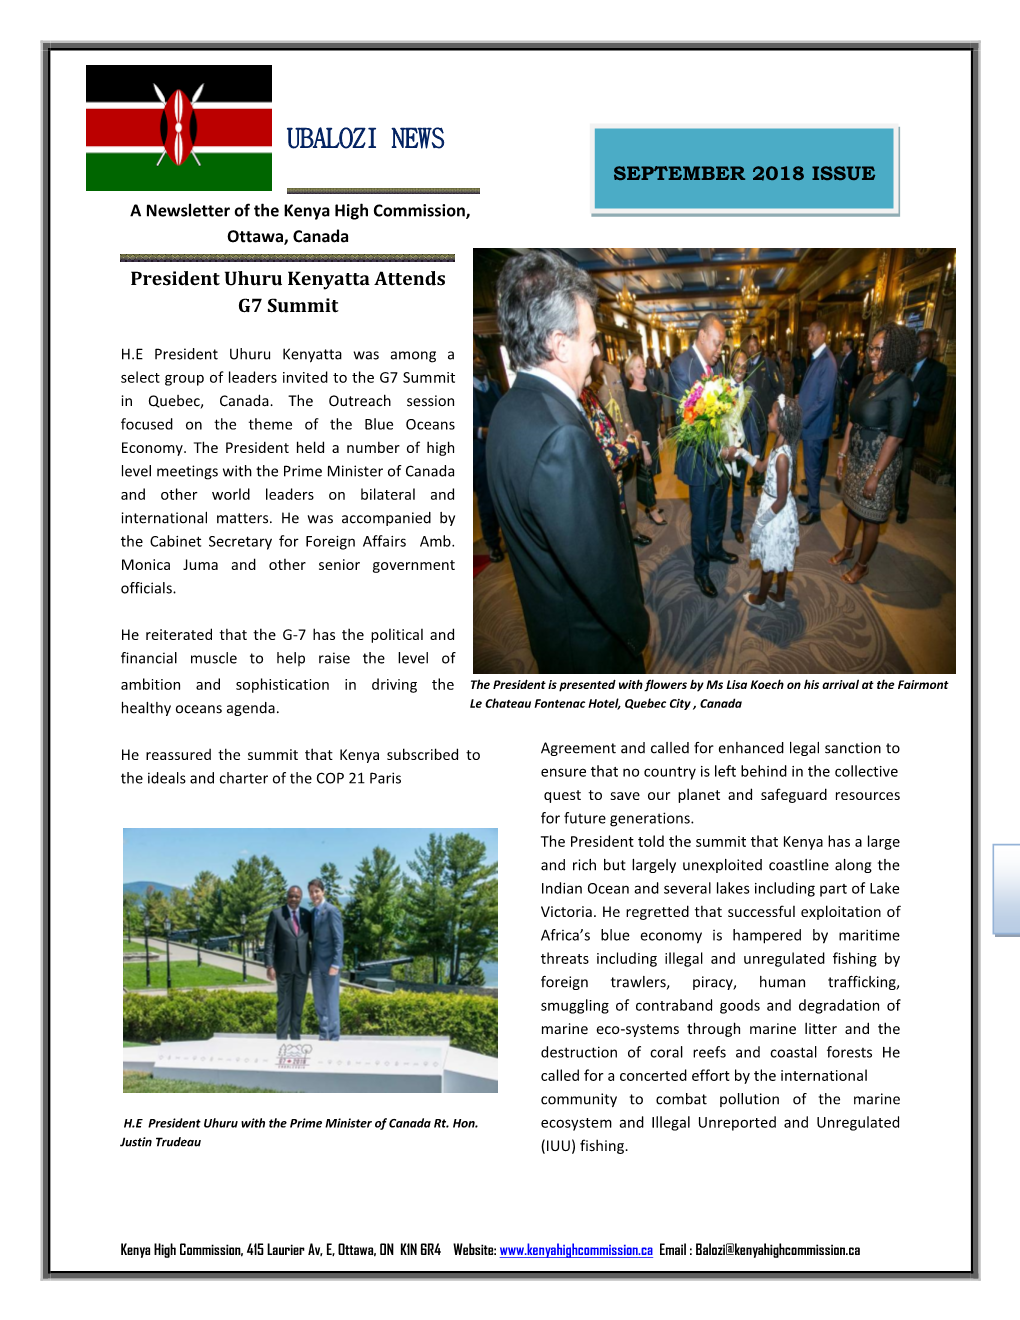 Ubalozi News September 2018 Issue